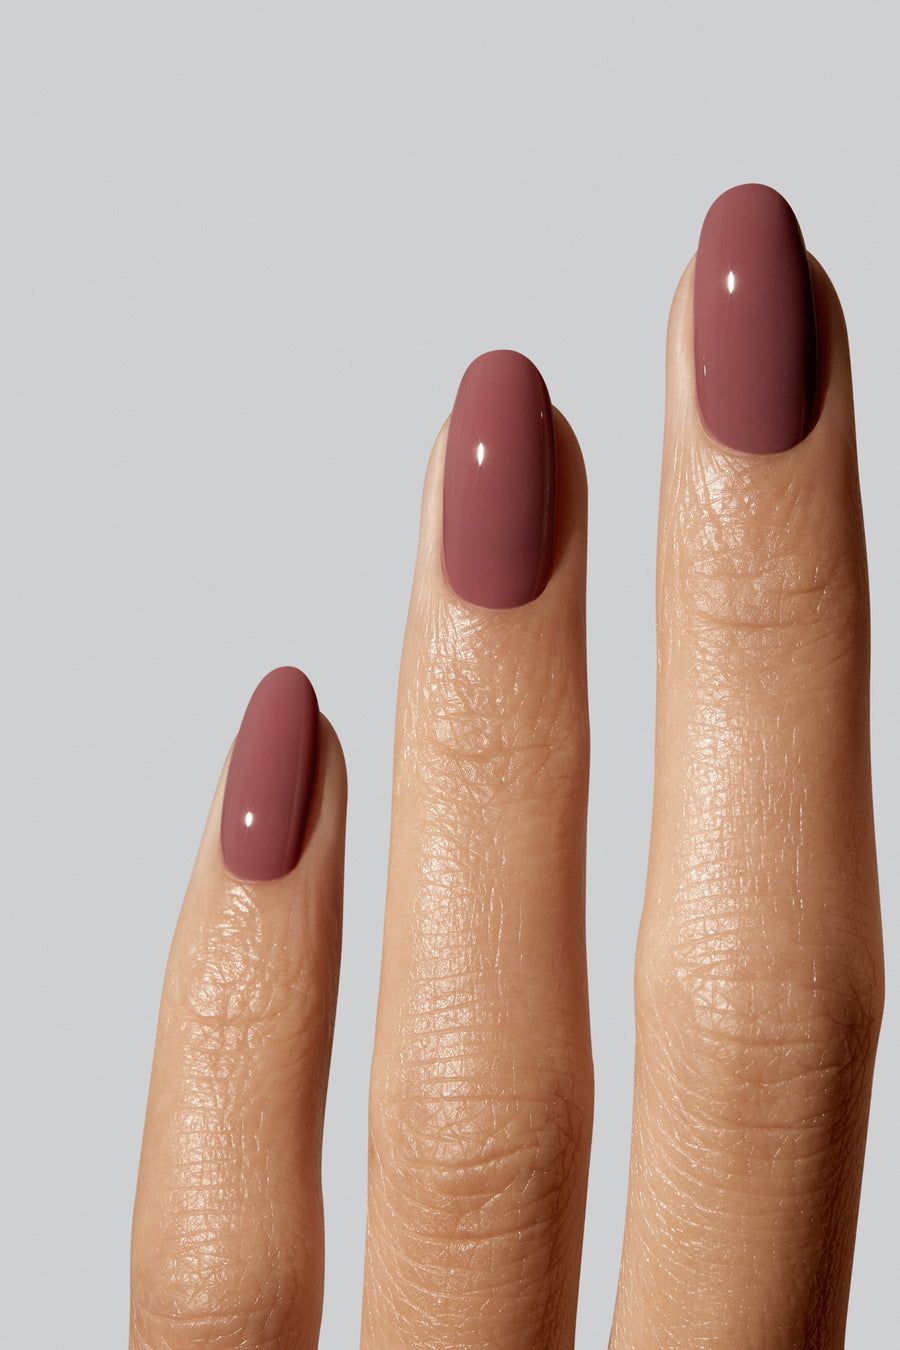 classy nail design